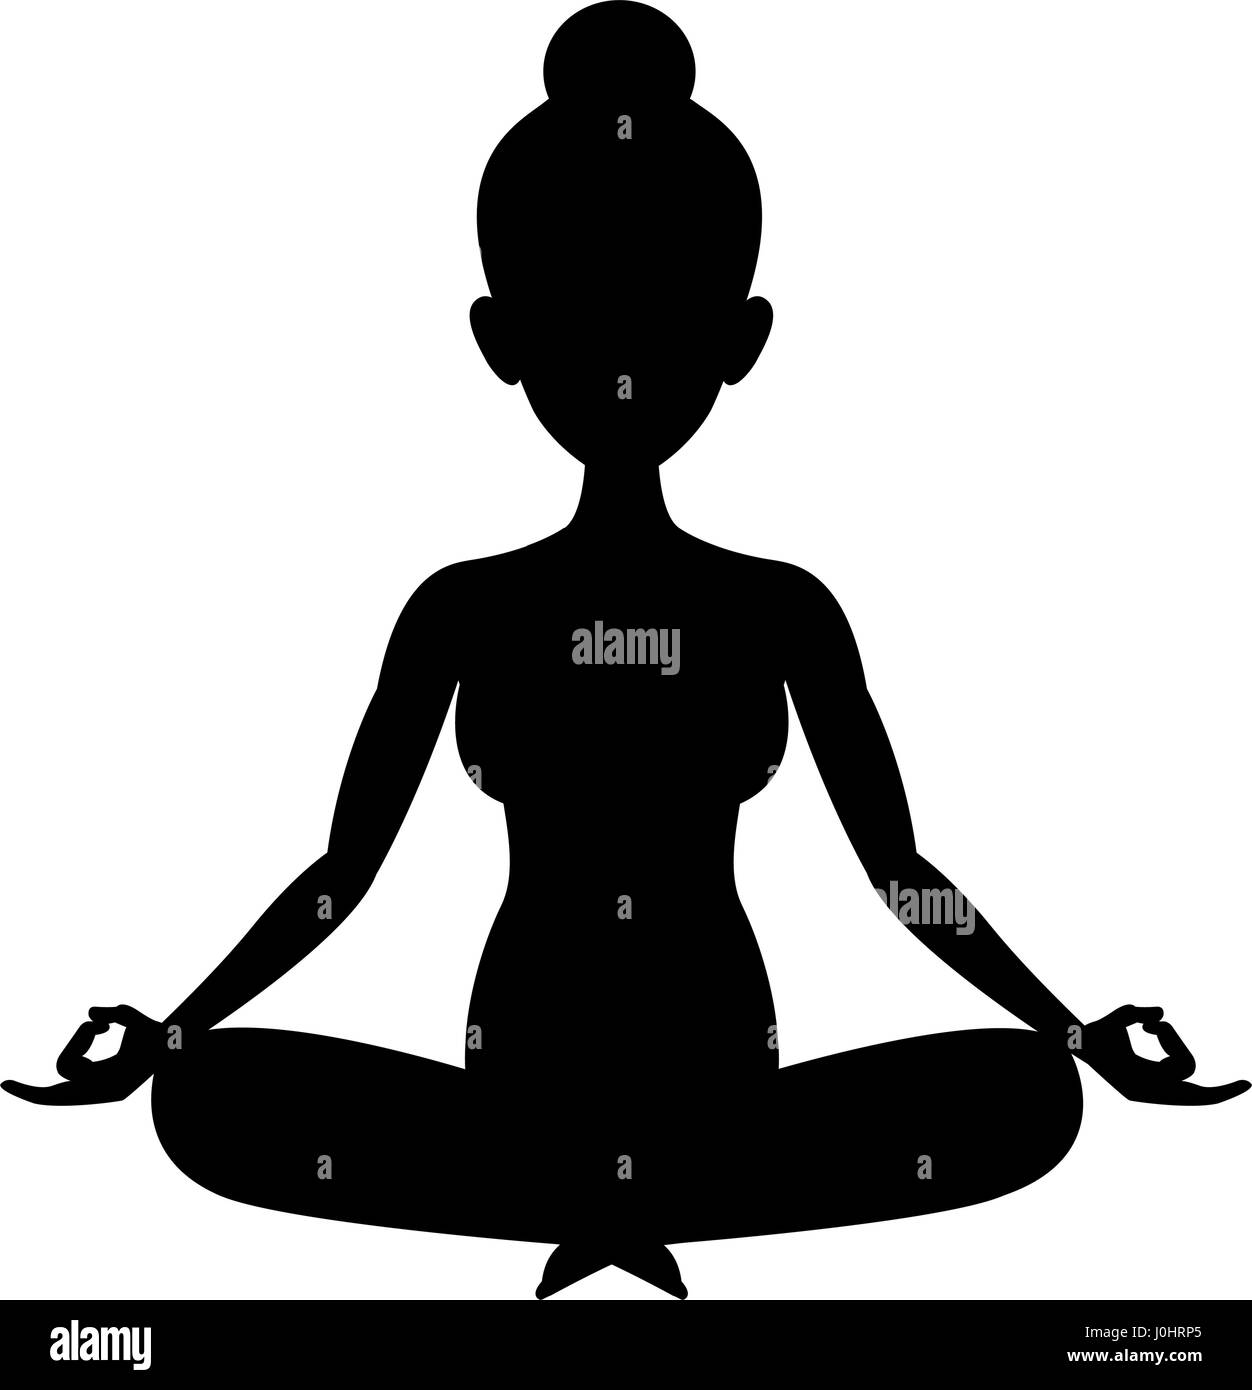 Indian yogi Black and White Stock Photos & Images - Page 2 - Alamy